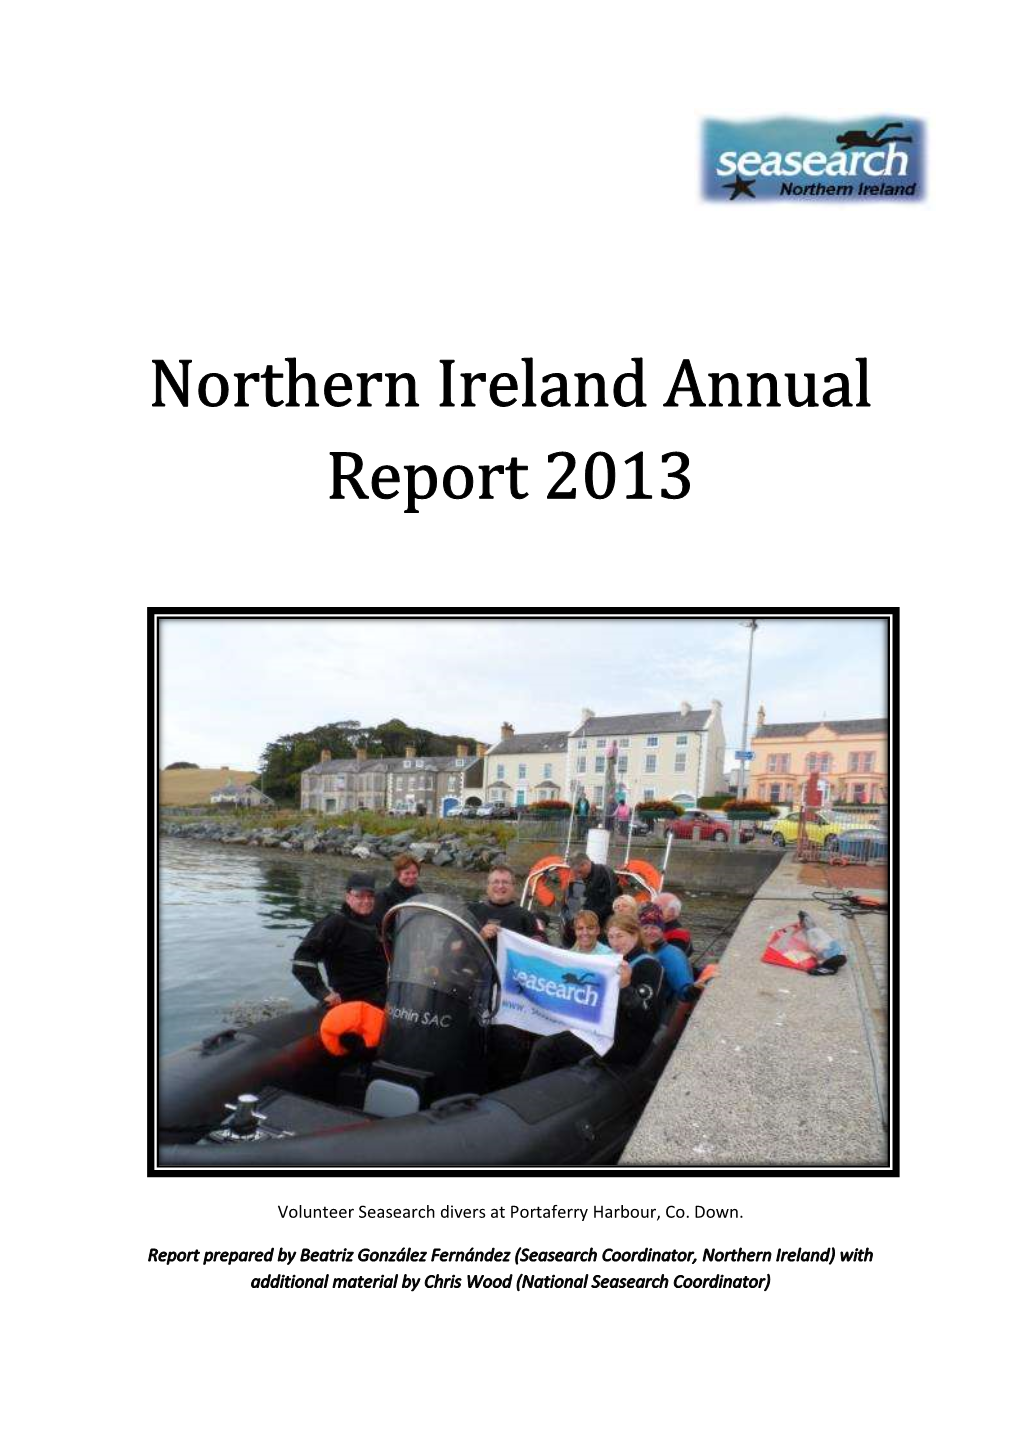 Northern Ireland Annual Report 2013